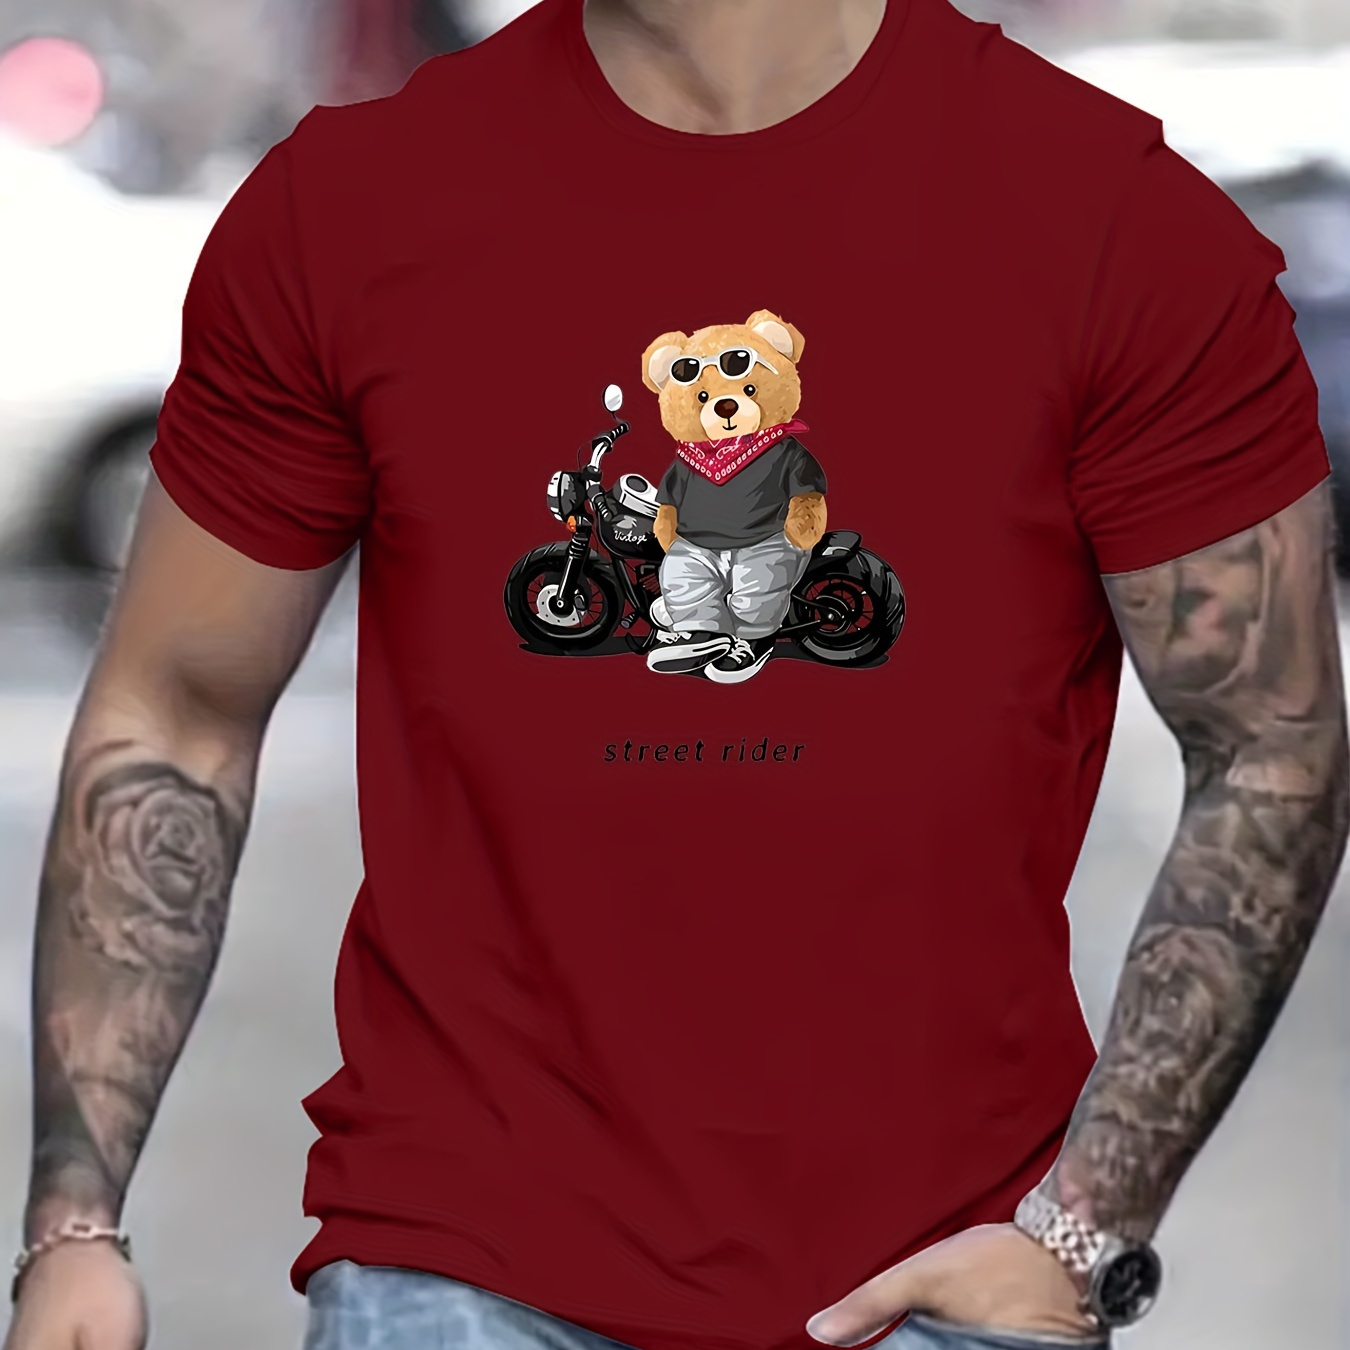 

Street Rider Toy Bear Pattern Men's T-shirt For Summer Outdoor, Men's Trendy Graphic Crew Neck Tops